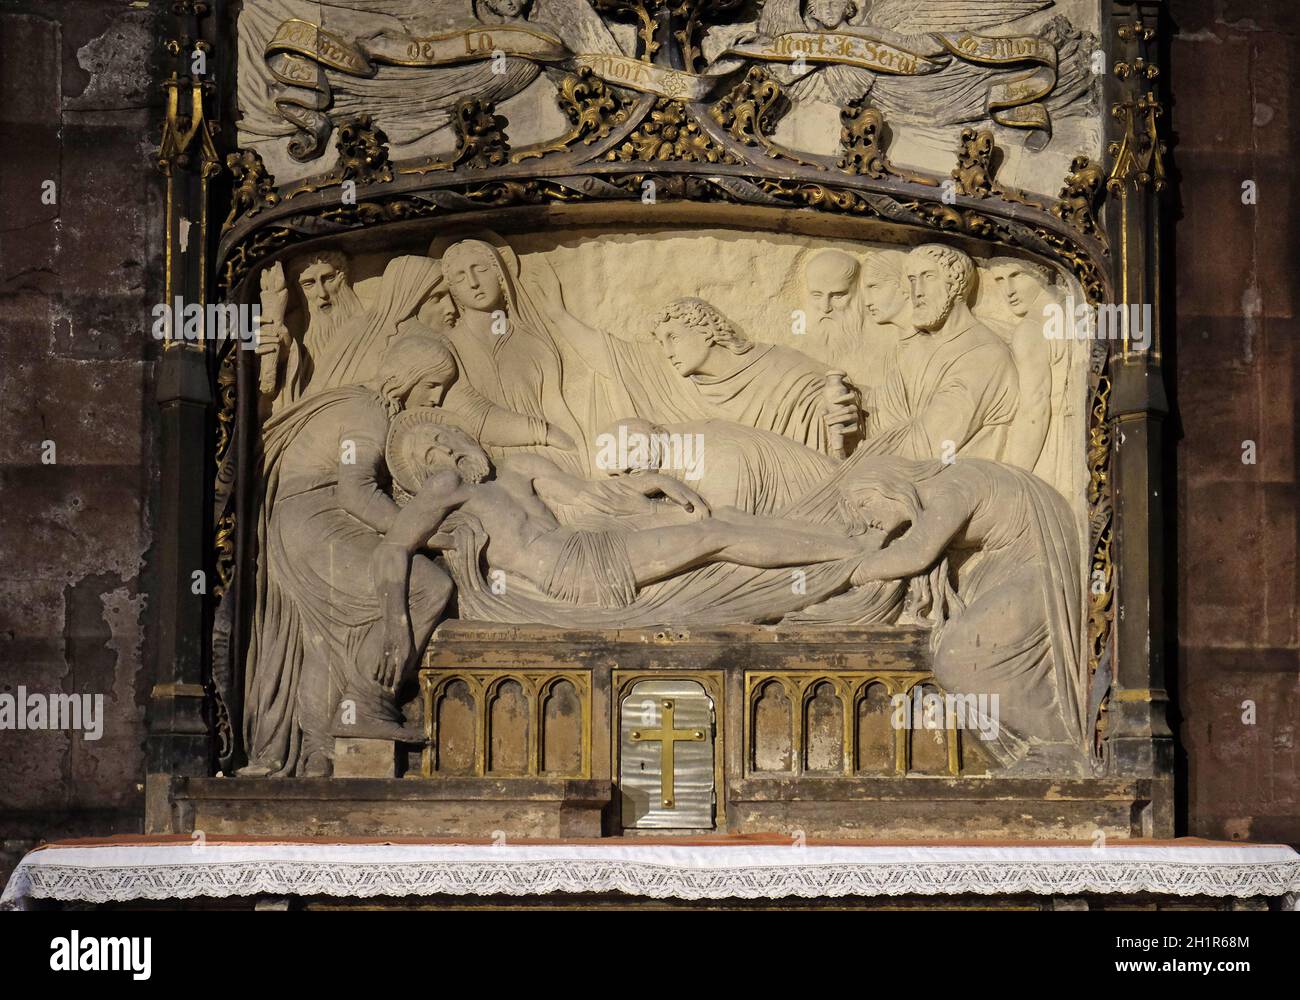 Entombment of Christ, altar in the Saint Germain l'Auxerrois church in Paris, France Stock Photo